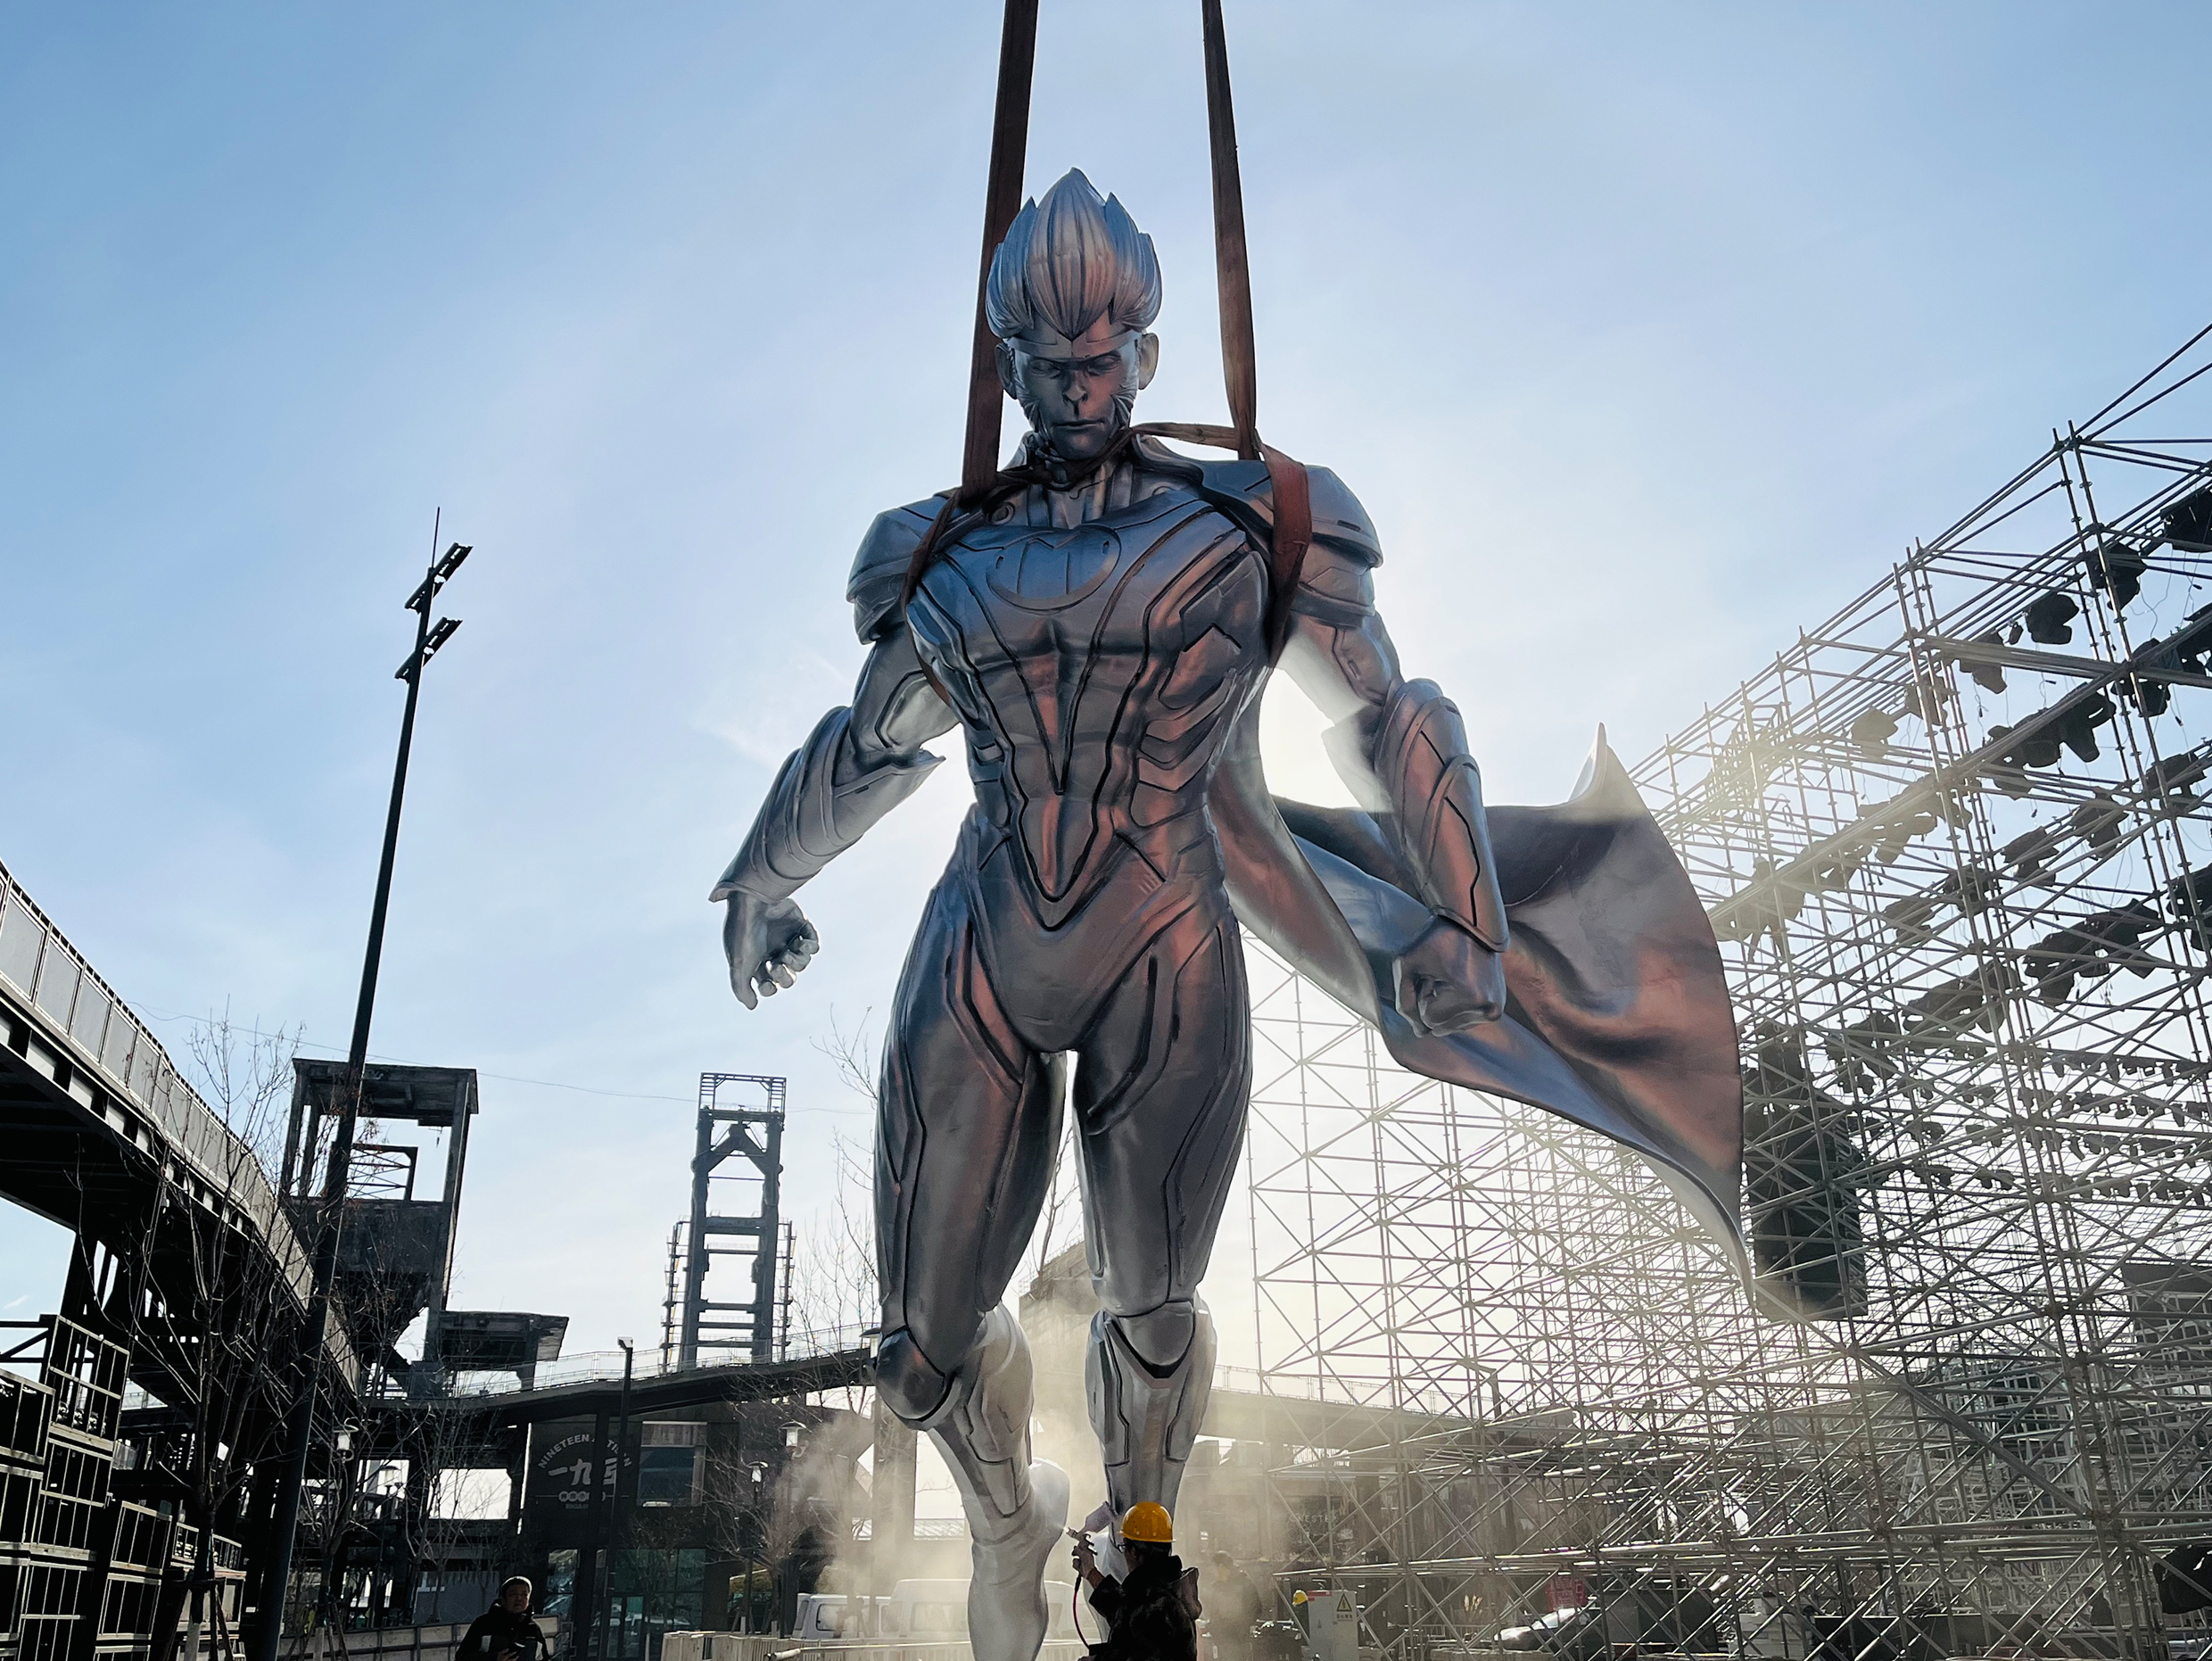 北京首钢园一高炉·SoReal科幻乐园丨MK大圣雕塑